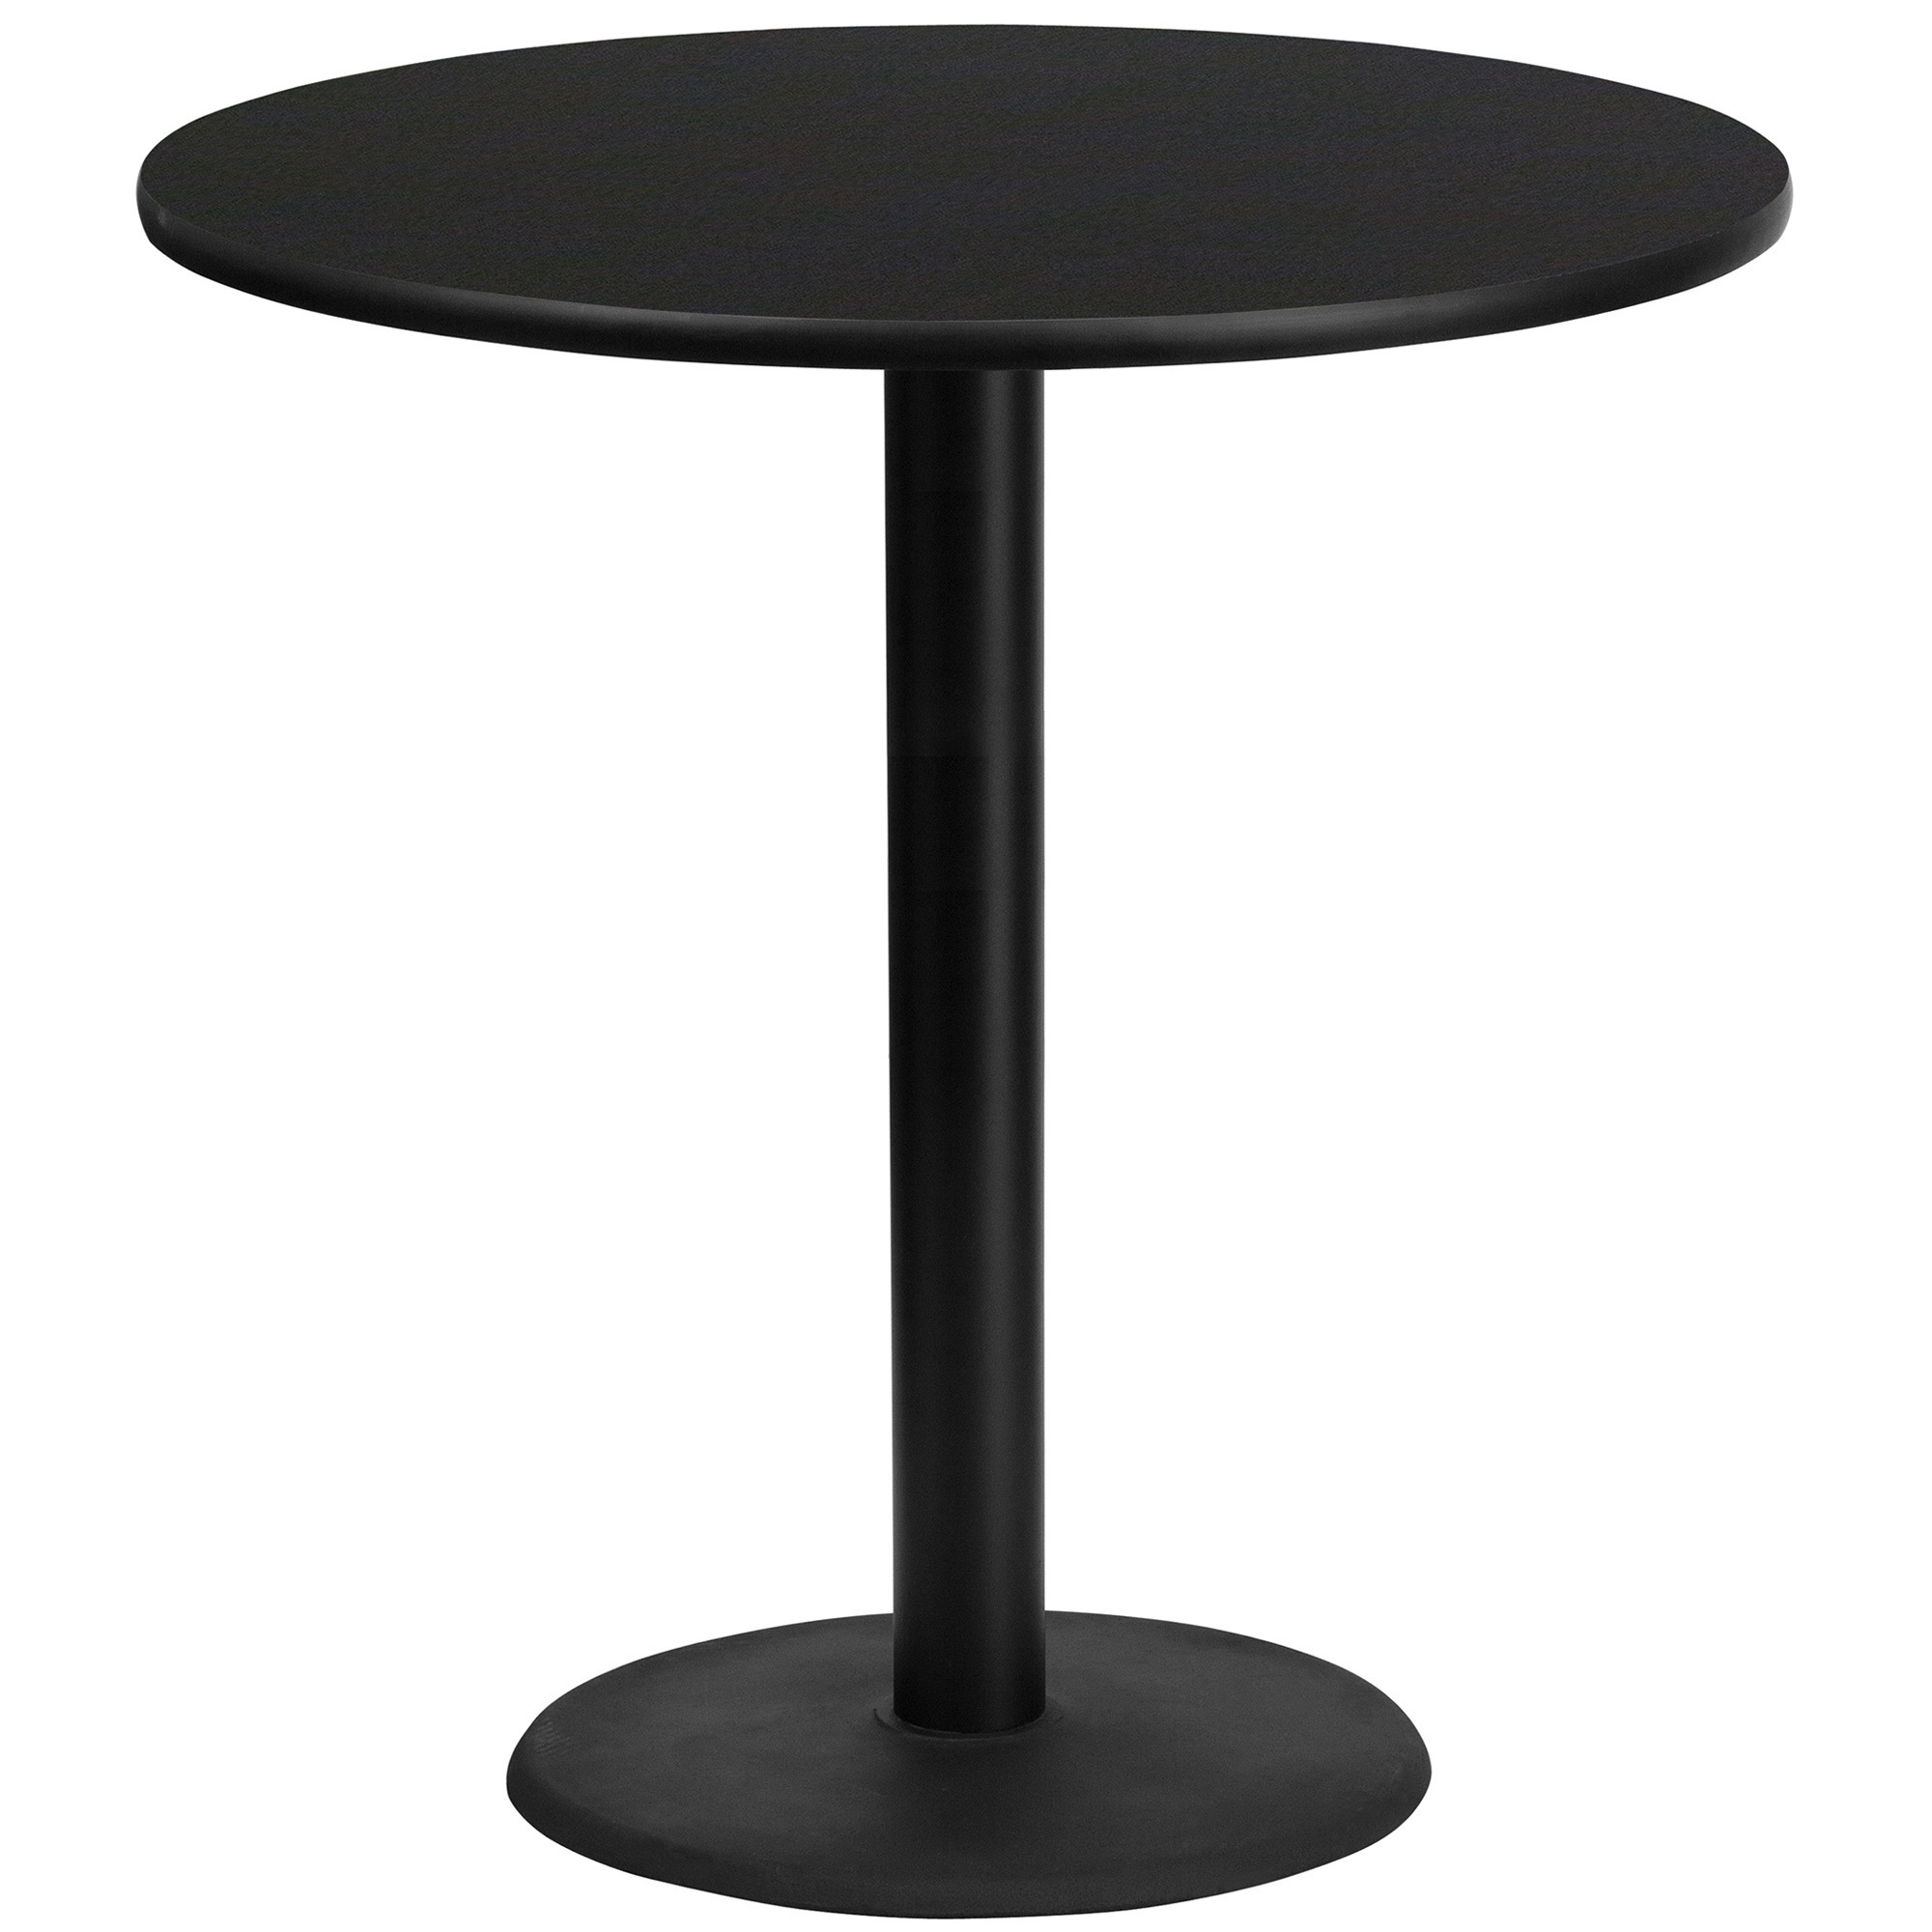 42Inch Round Bar Table with Round Base — Reversible Black/Mahogany Top, Model - Flash Furniture XURD42BKTR24B